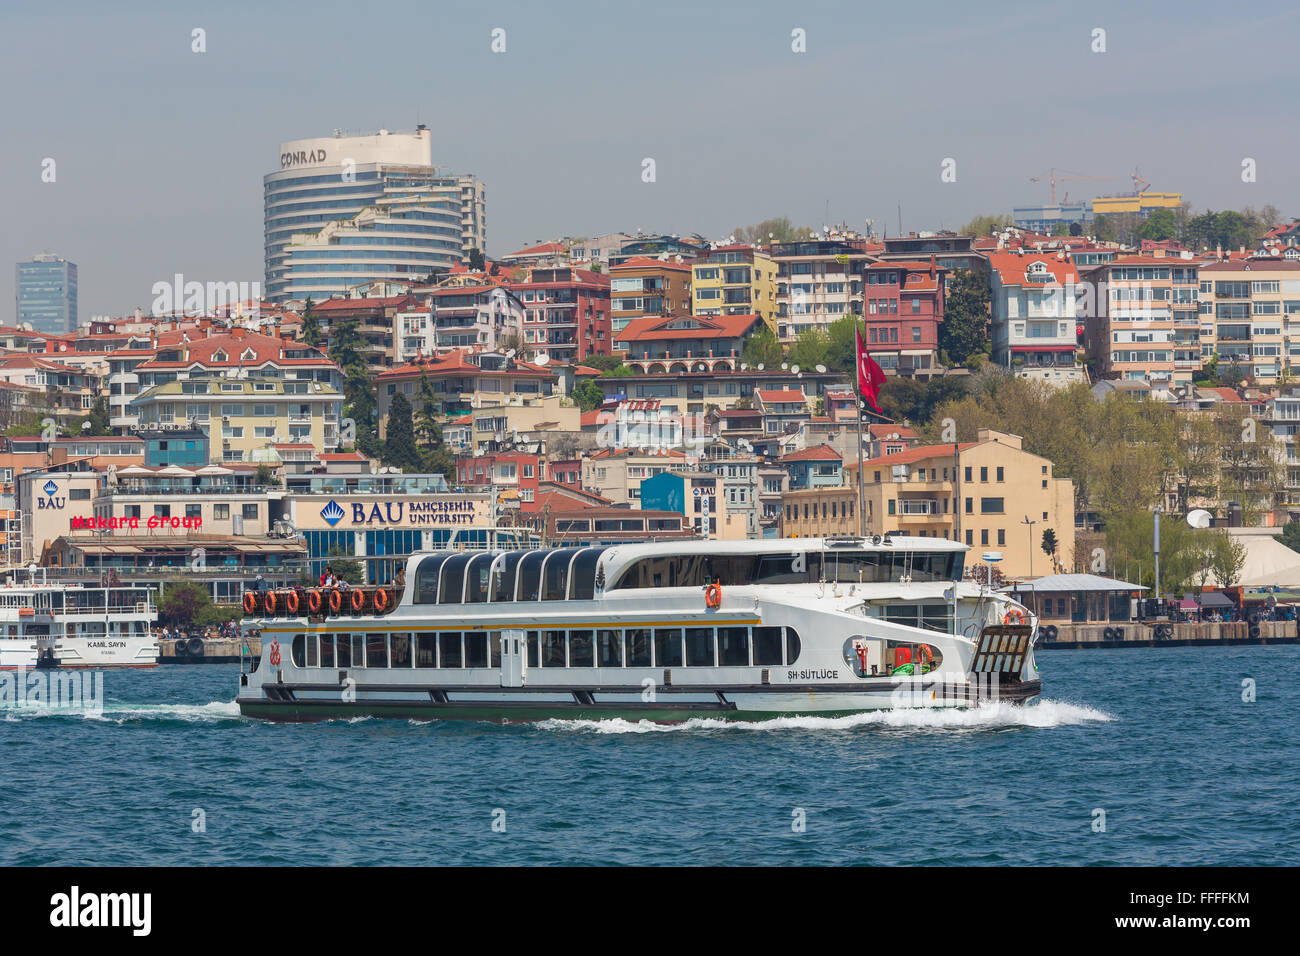 Cityscape of Istanbul, Turkey from Bosphorus Stock Photo